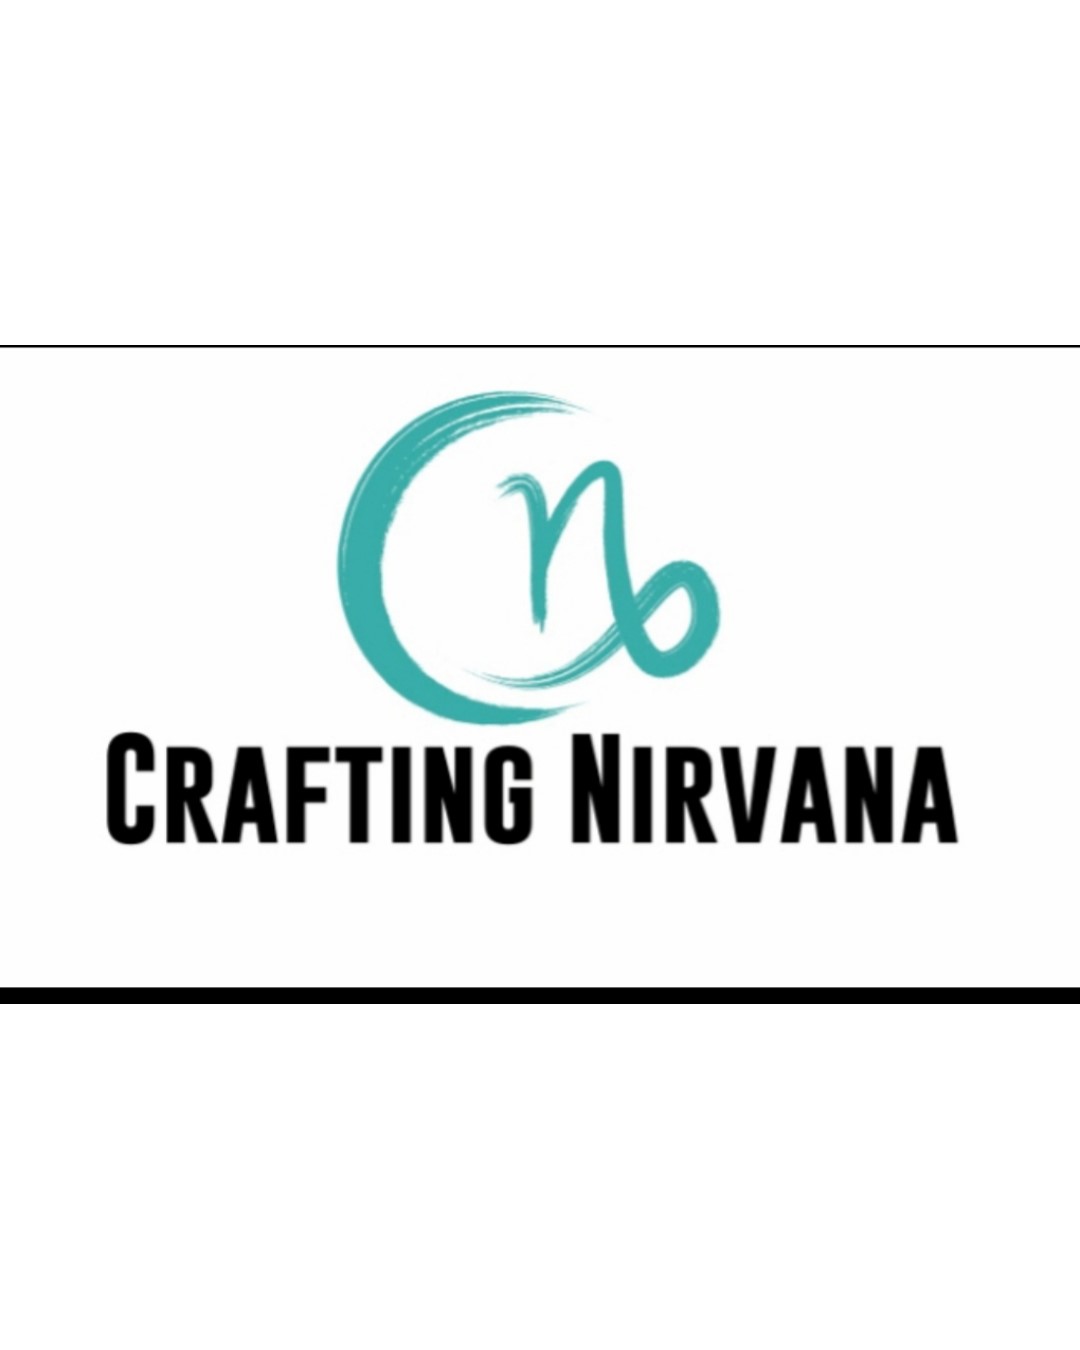 Crafting Nirvana